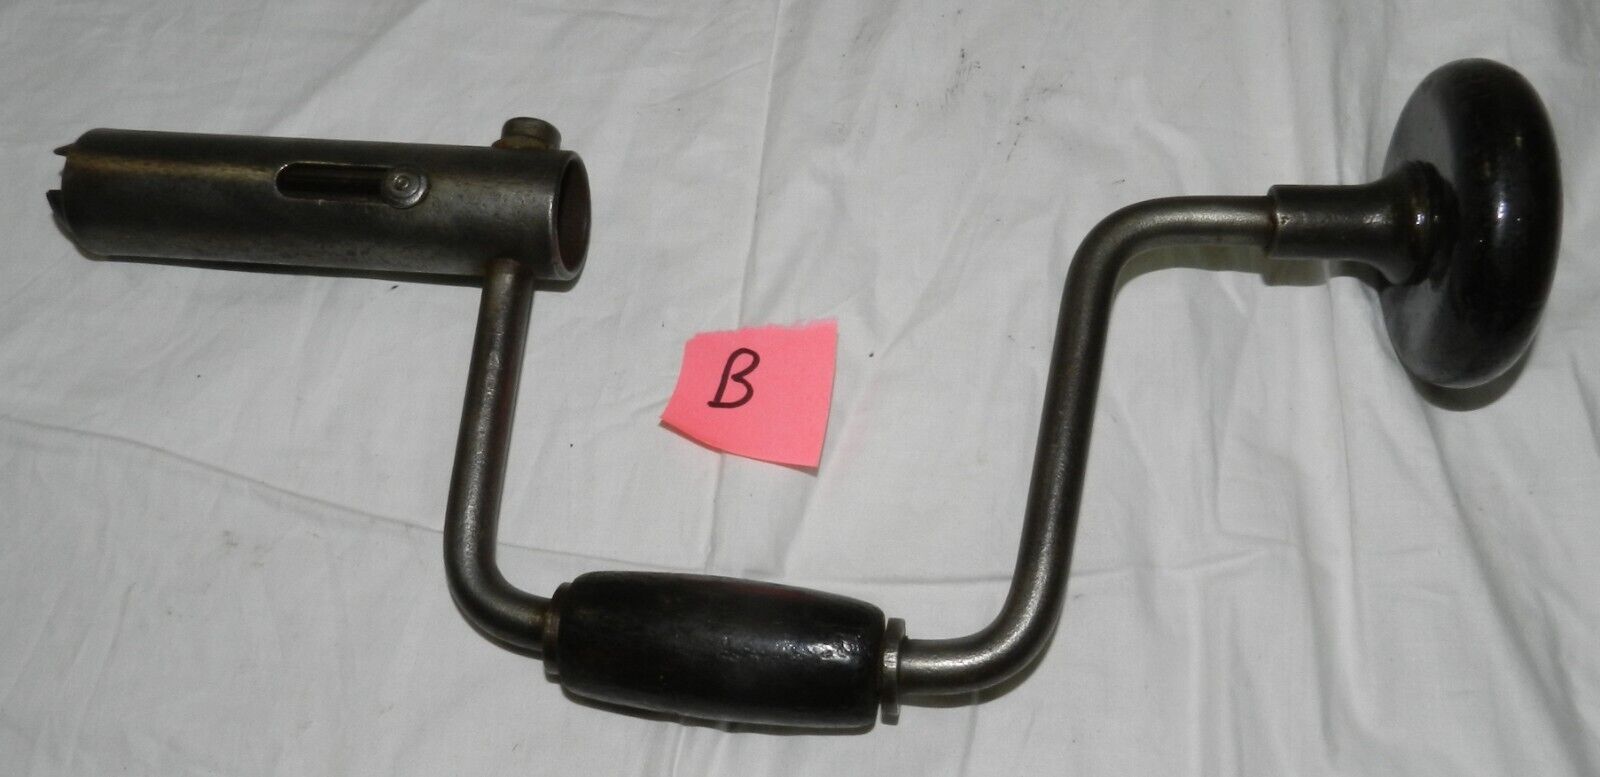 Lot B - Vintage Carpenter\'s Drill Brace with unusual chuck mechanism